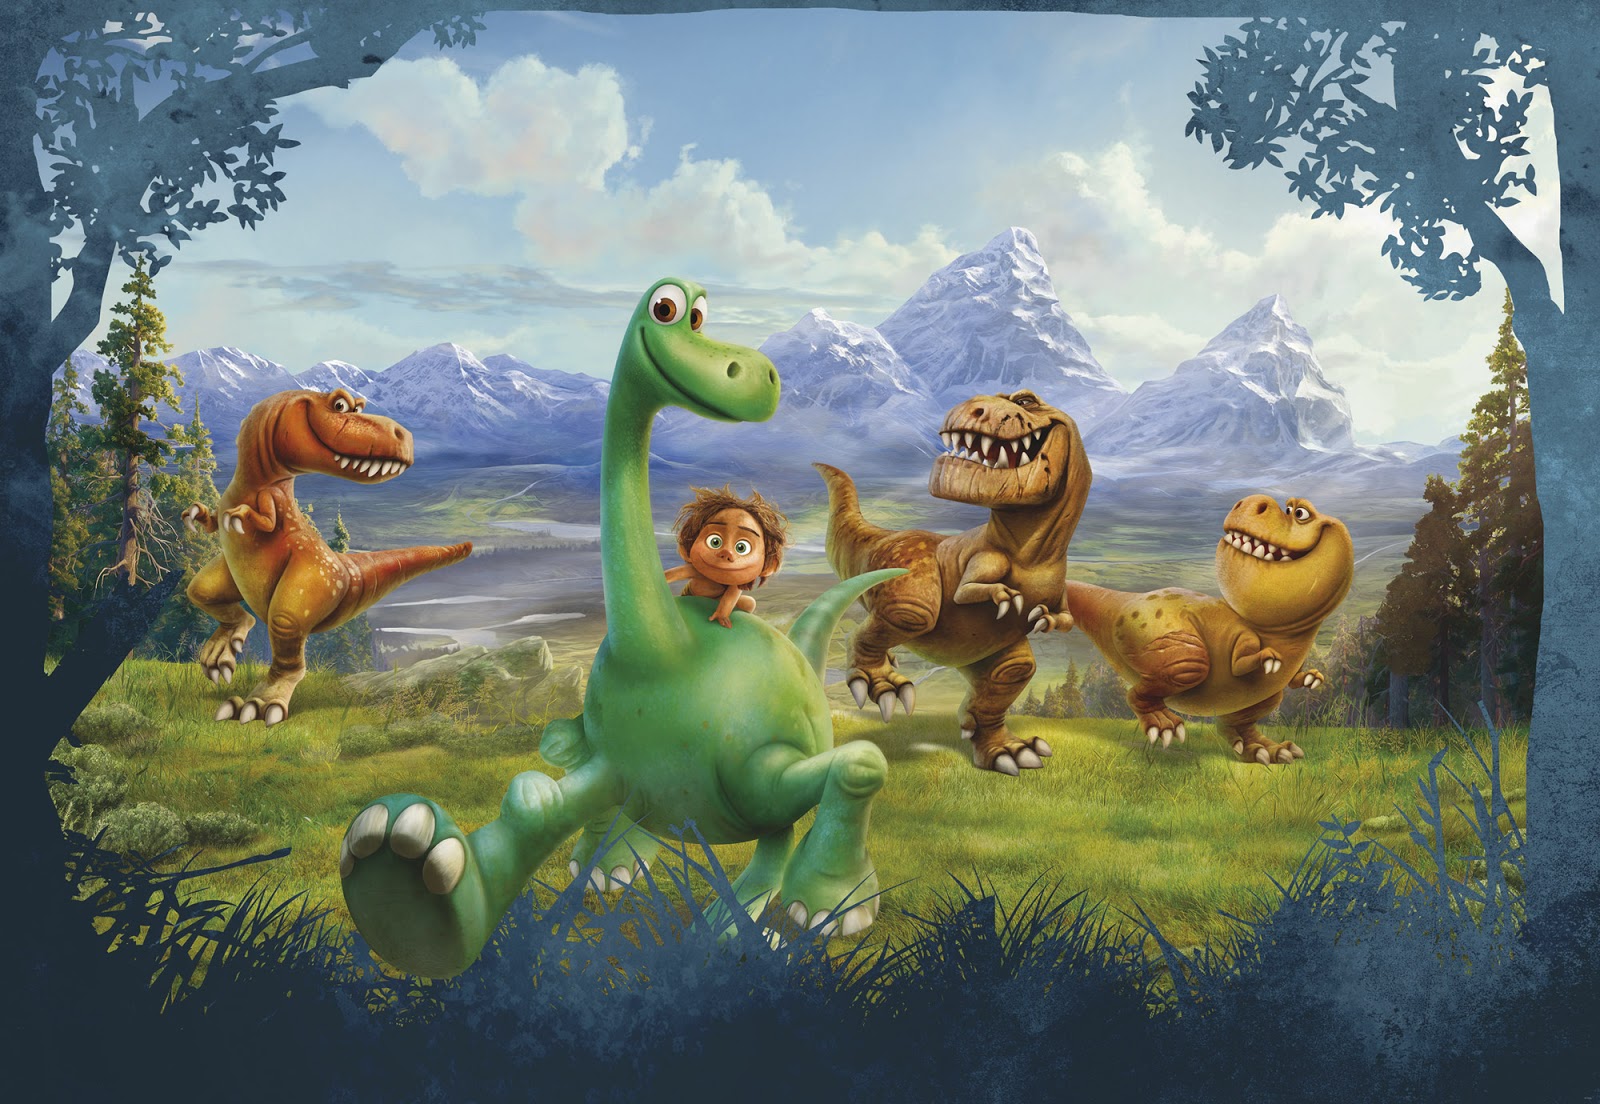 Gambar The Good Dinosaur Film Disney Terbaru Dino Yang Baik Gambar